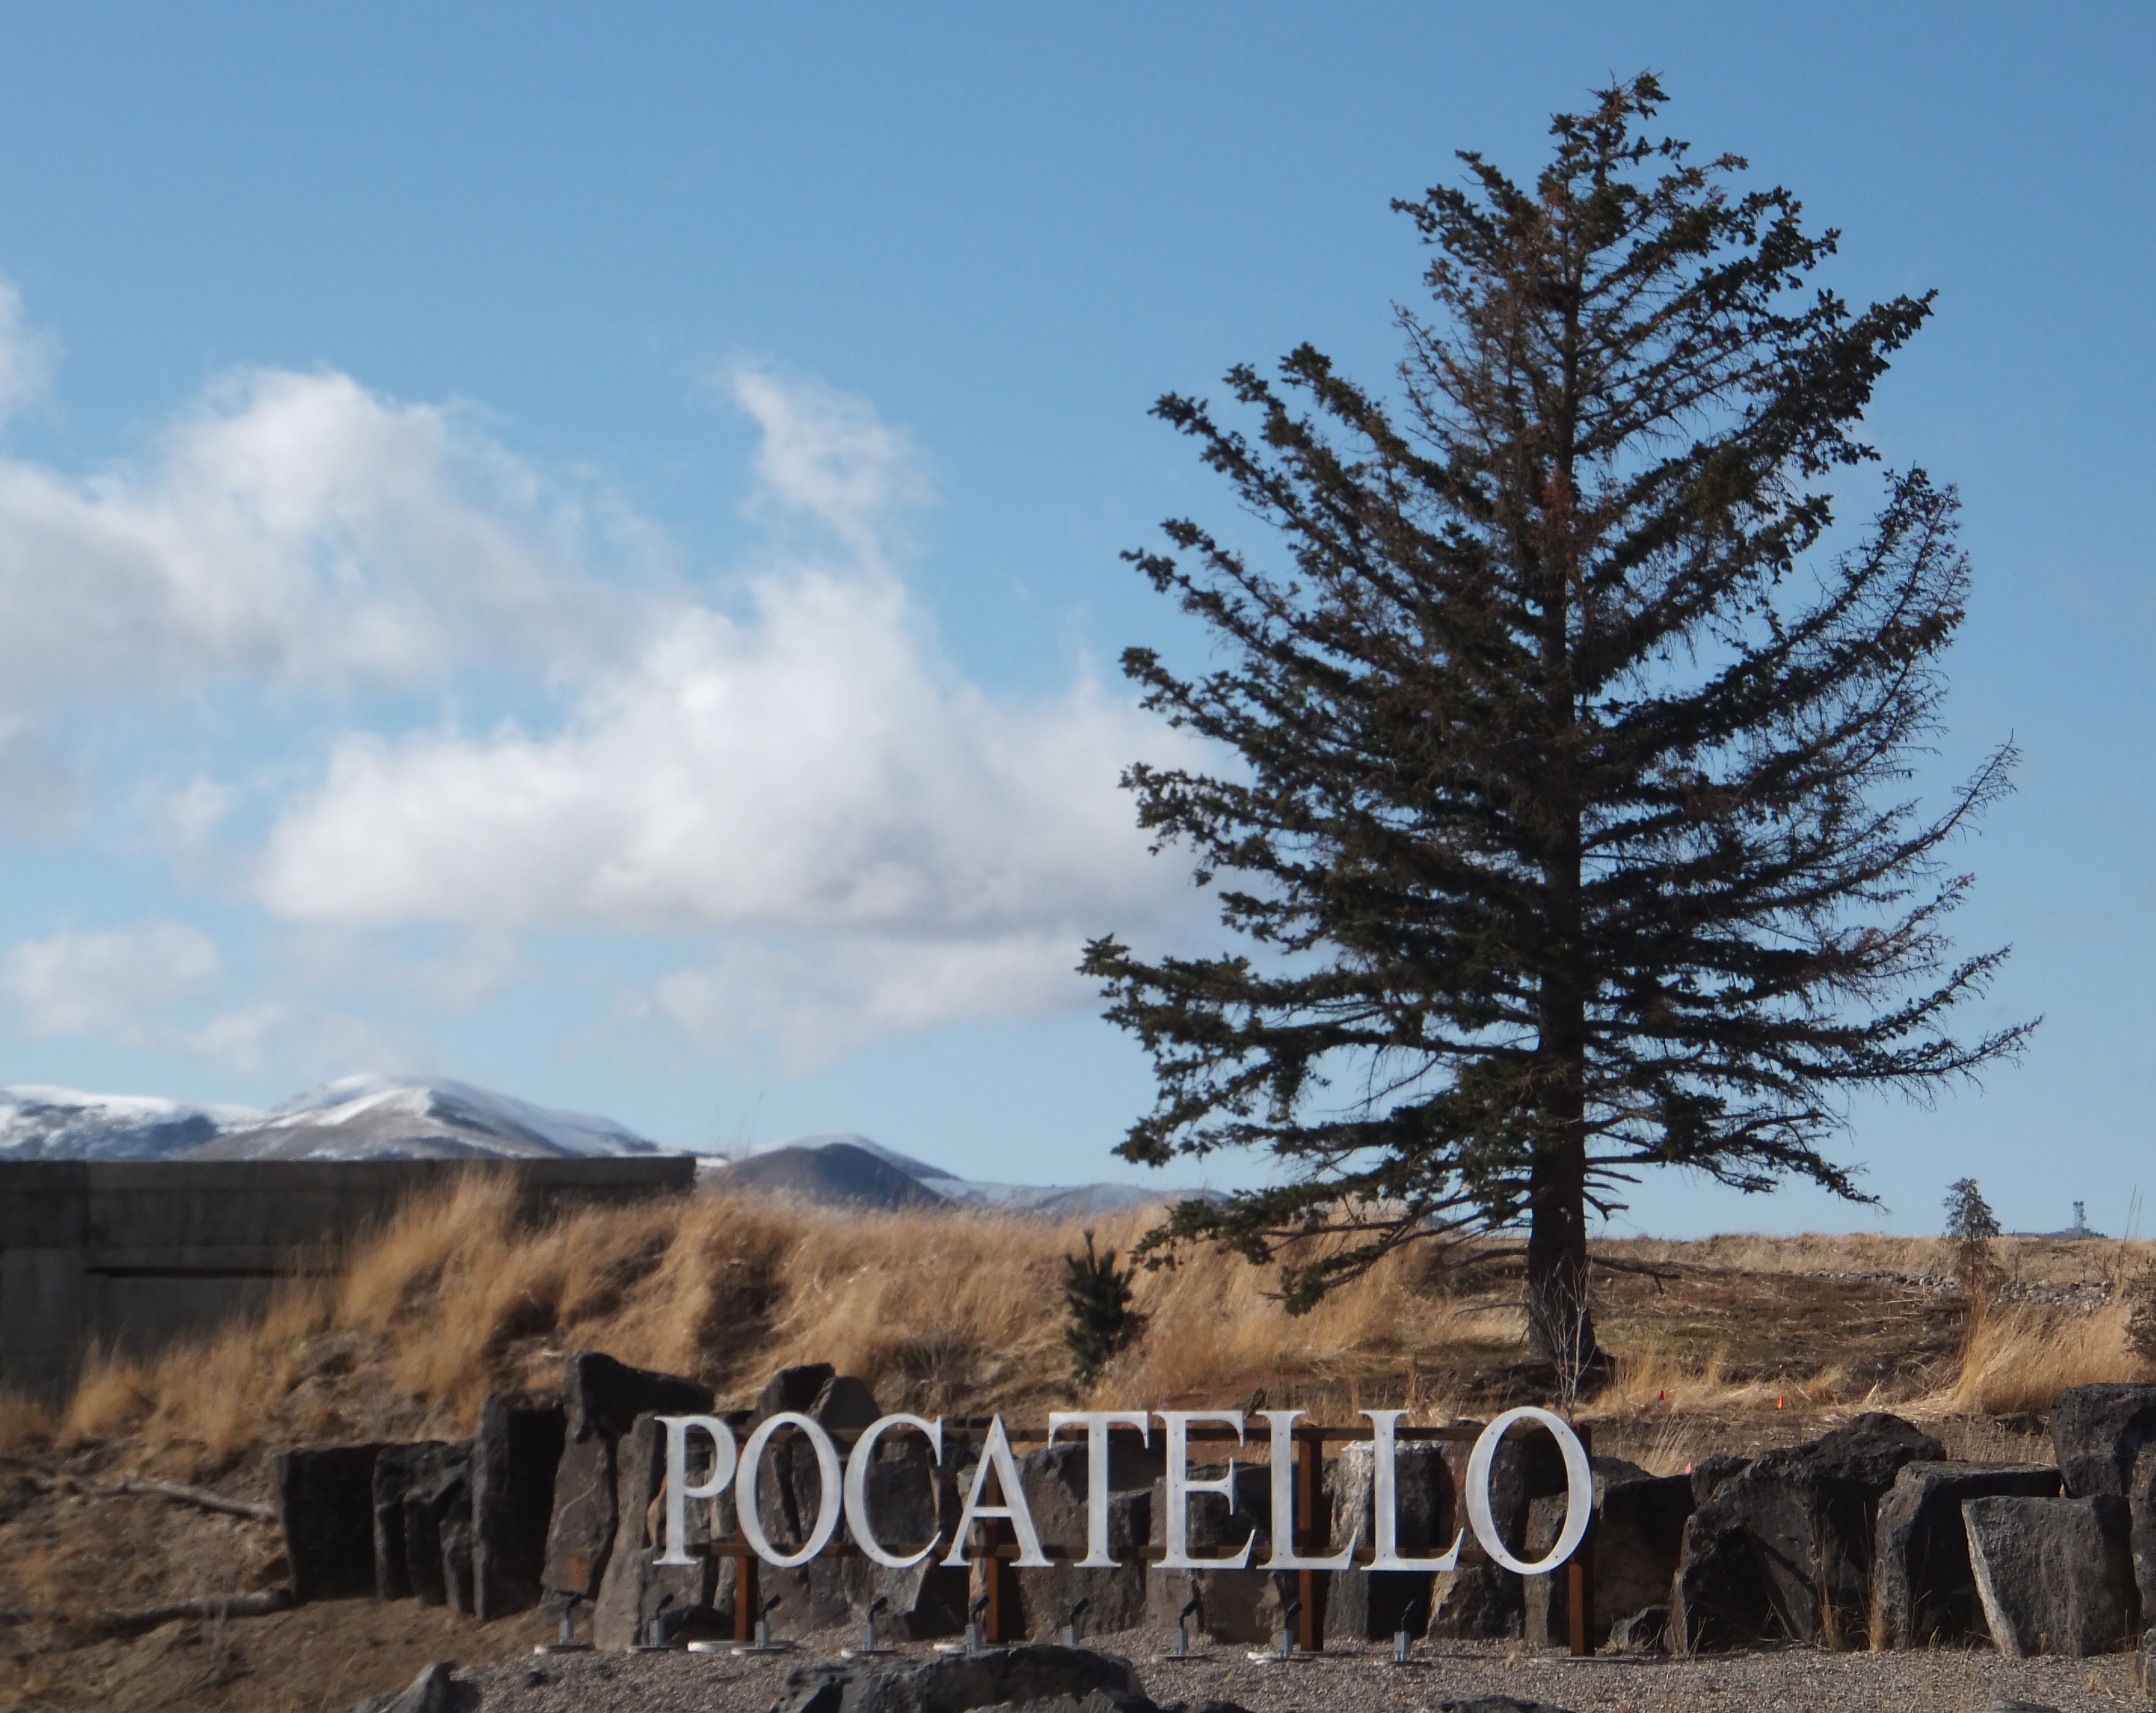 New Pocatello Sign DSCF4987.jpg